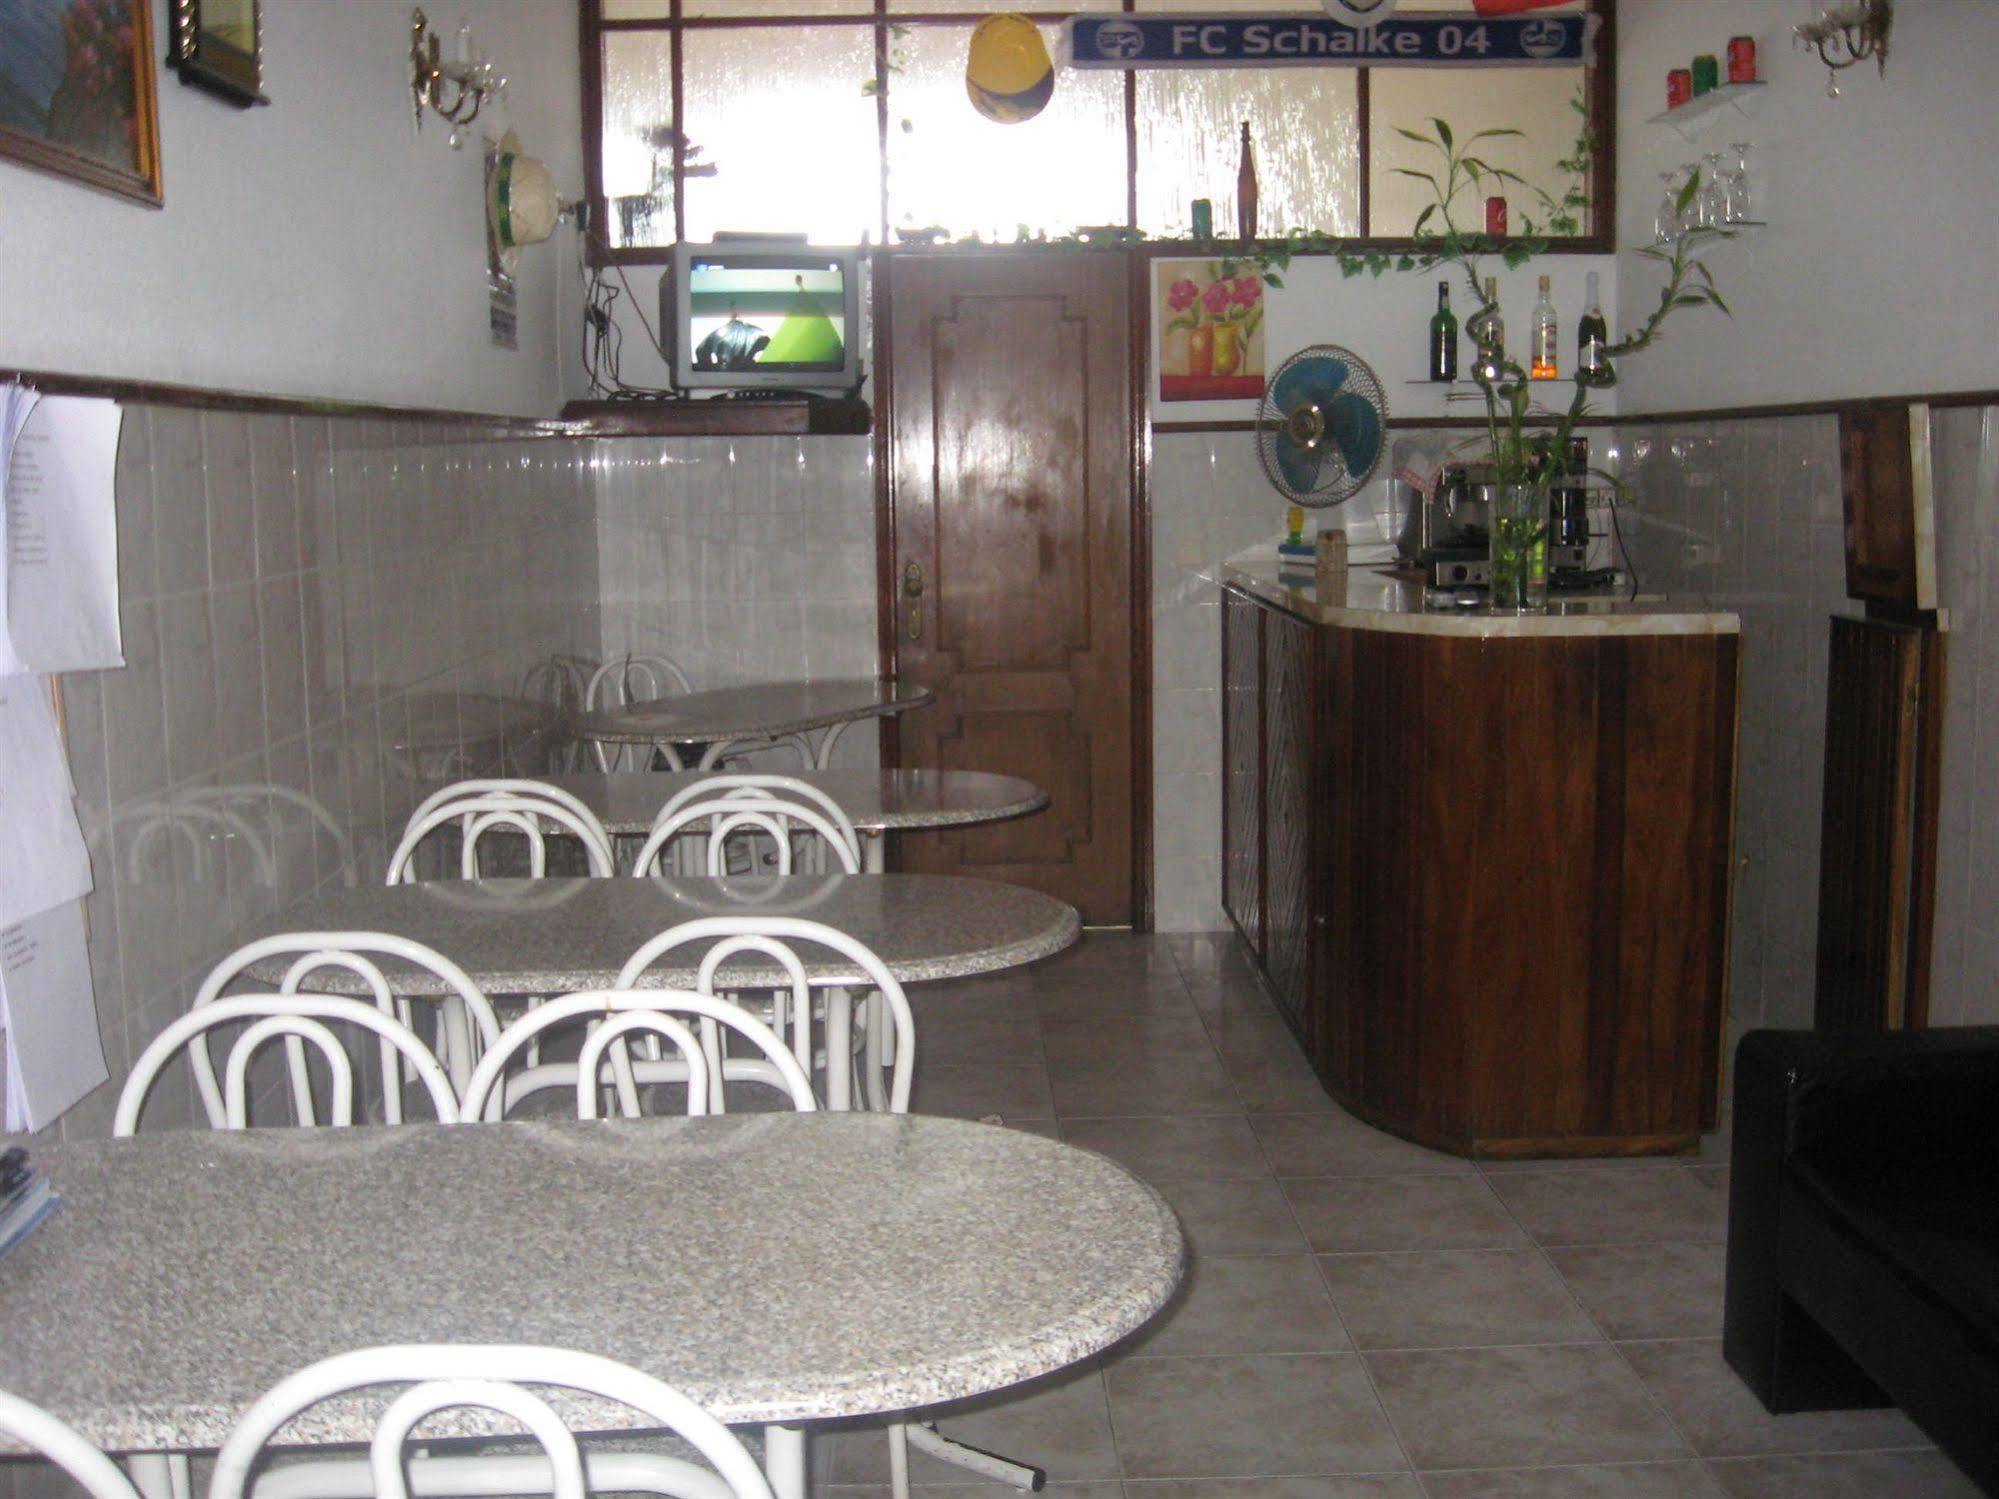 Residencial Porto Novo - Alojamento Local Exteriör bild